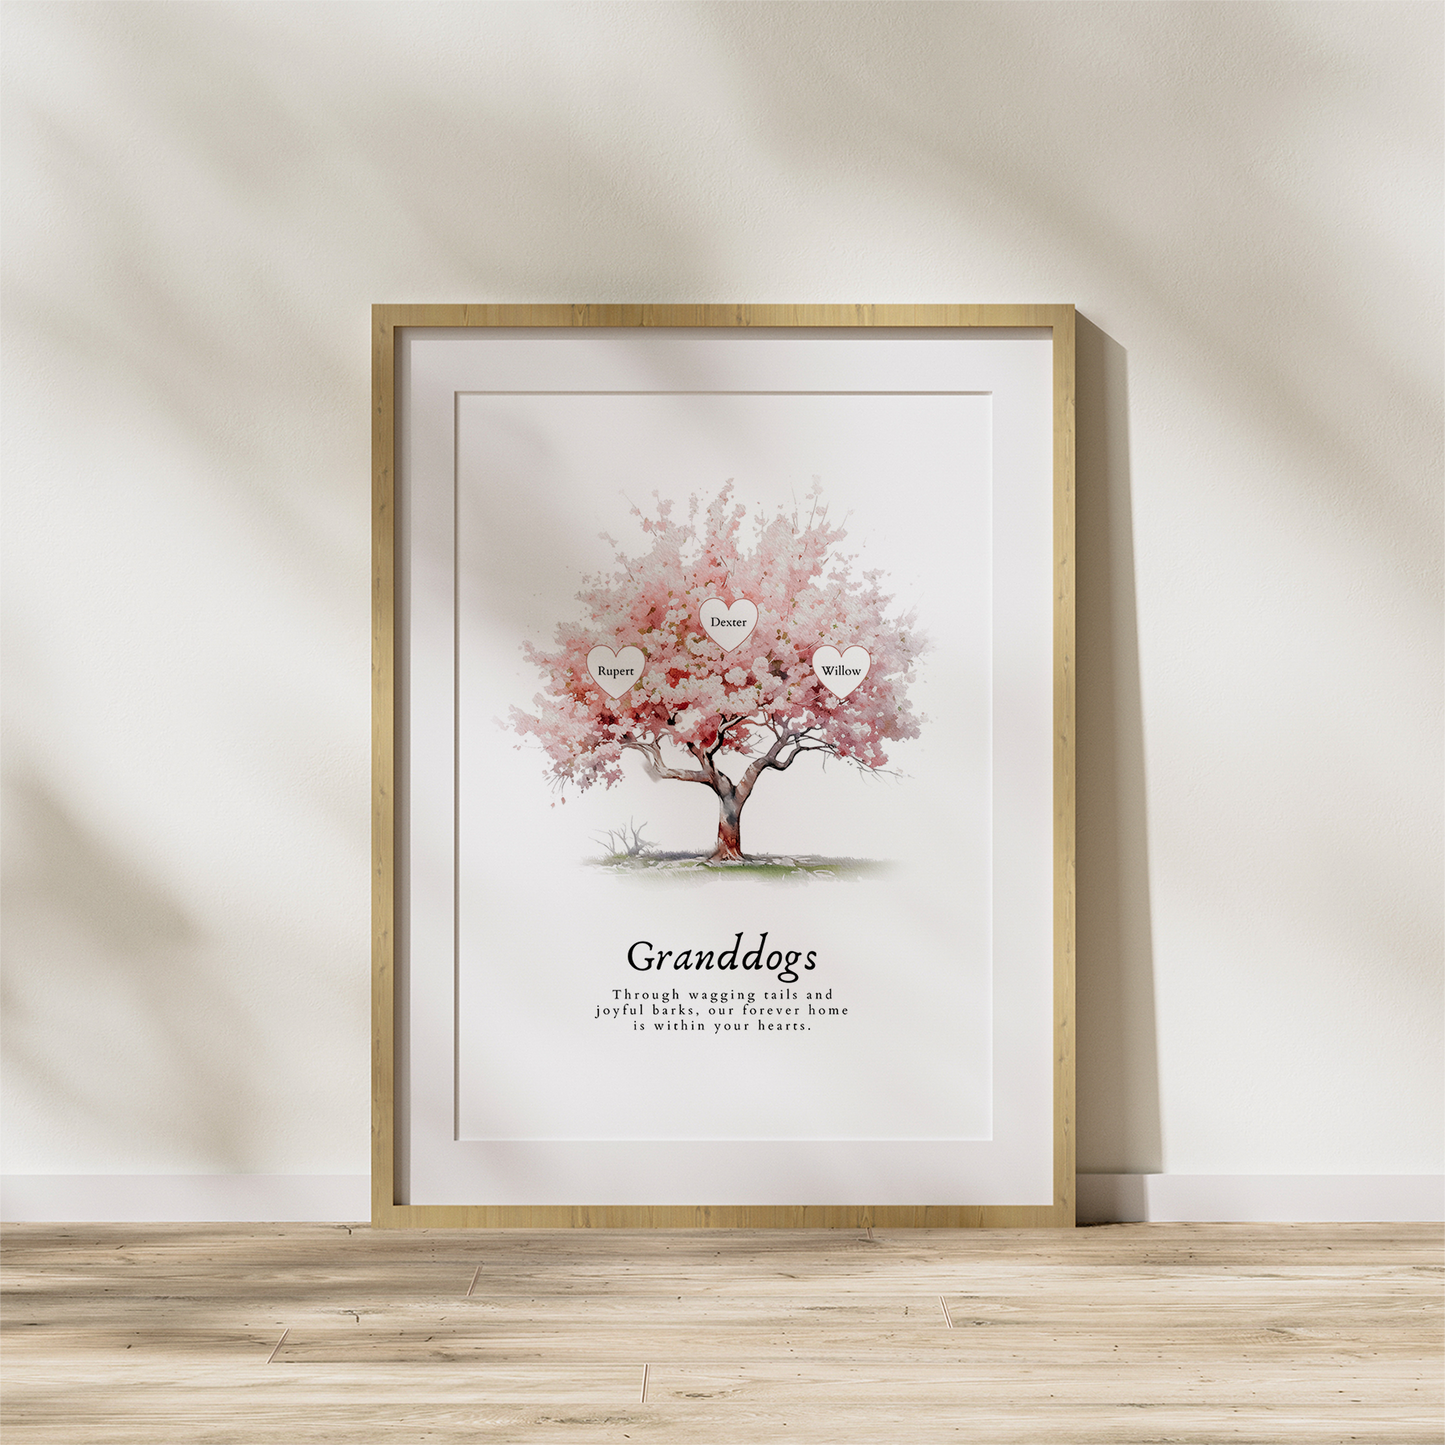 Granddogs Family Tree Print